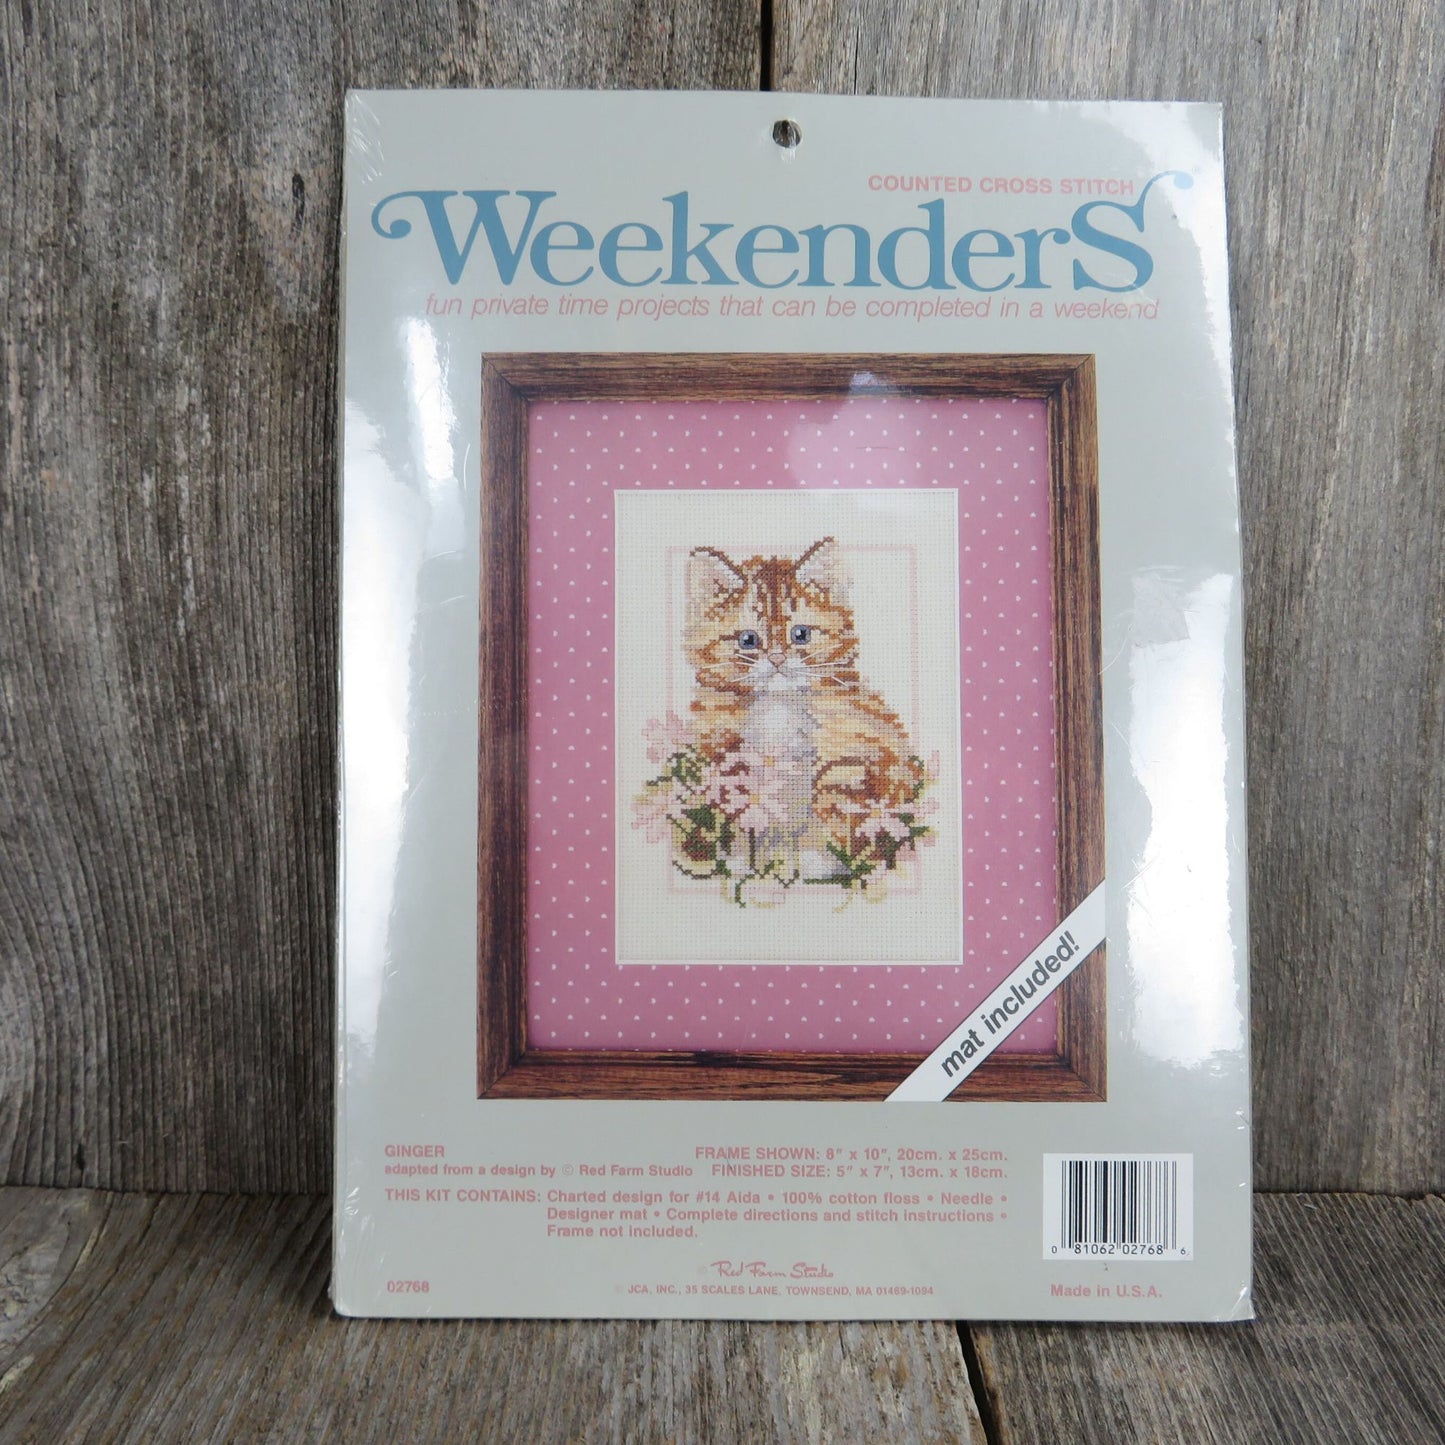 Ginger Cat Kitten Counted Cross Stitch Kit Weekenders Kit 02768 Cat lover